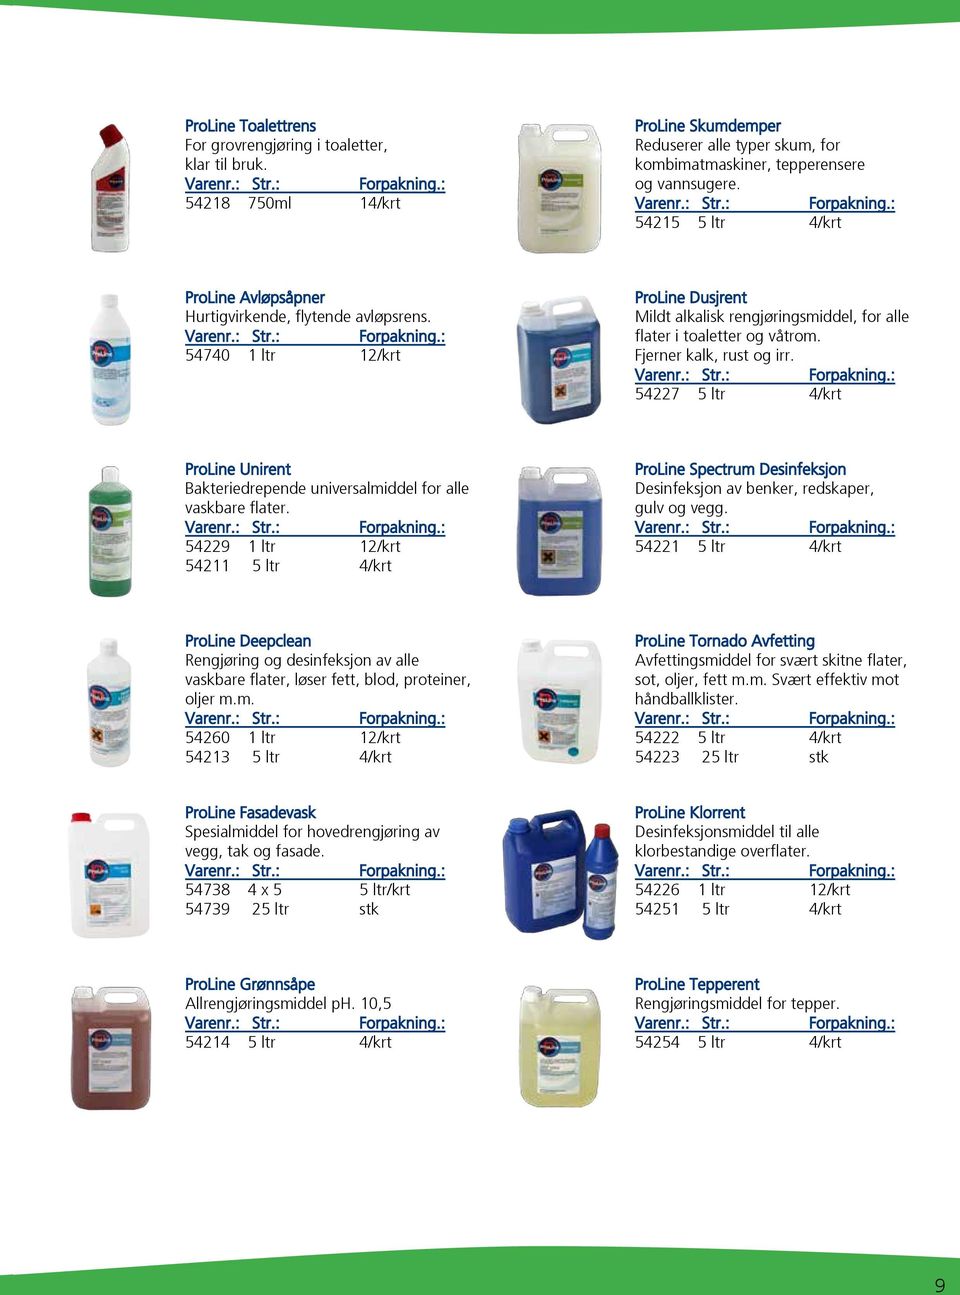 Fjerner kalk, rust og irr. 54227 5 ltr 4/krt ProLine Unirent Bakteriedrepende universalmiddel for alle vaskbare flater.